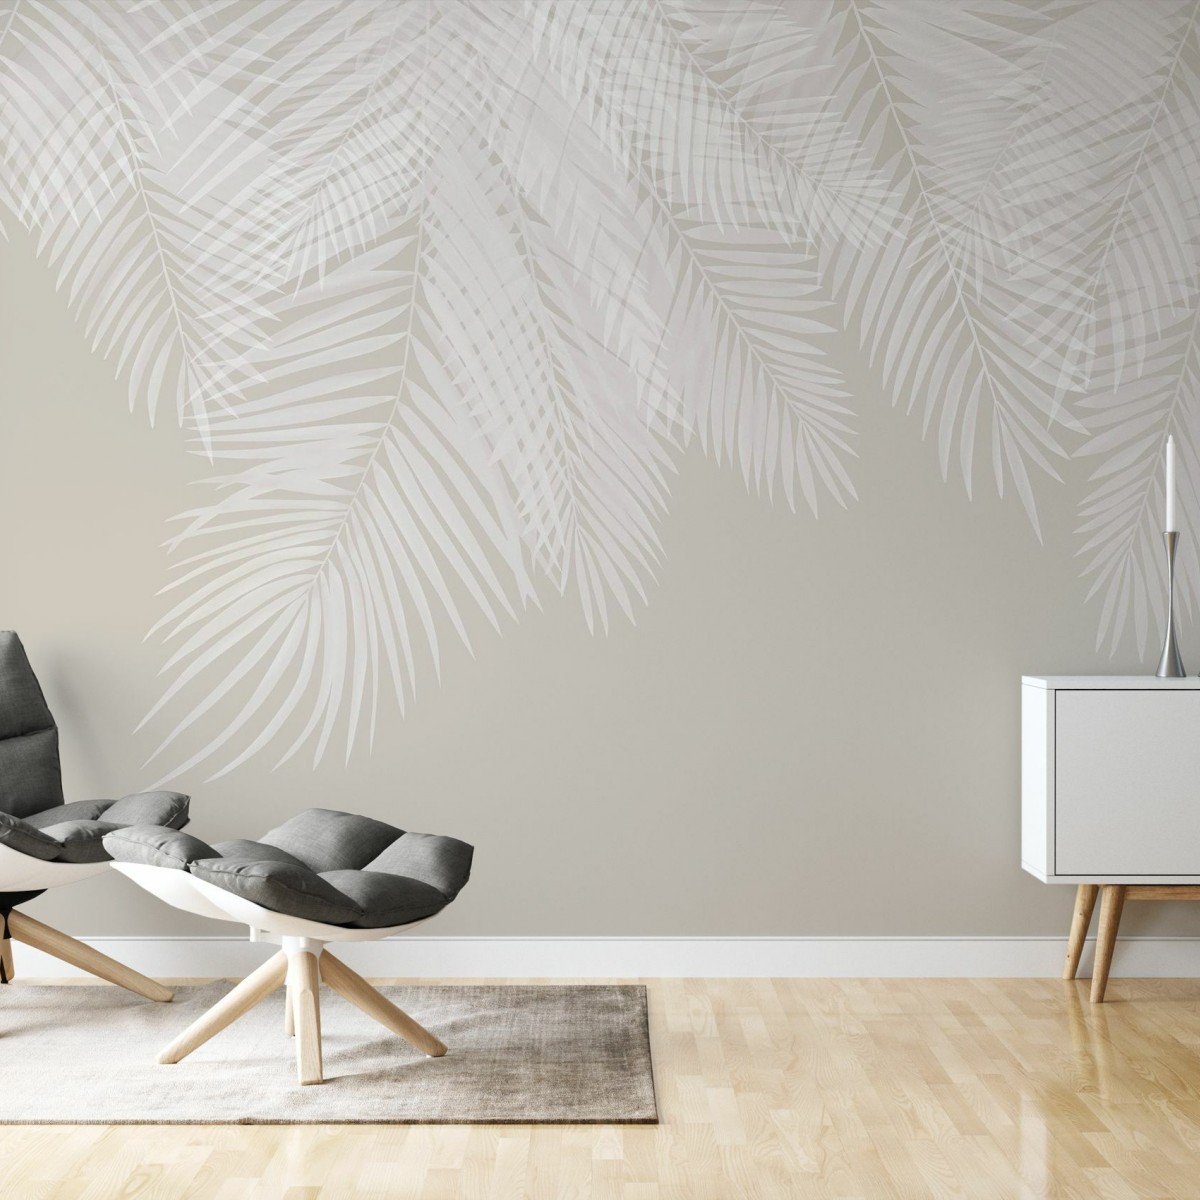 Fototapet Hanging Palm Leaves, Beige-White, Personalizat, Photowall, Fototapet living 